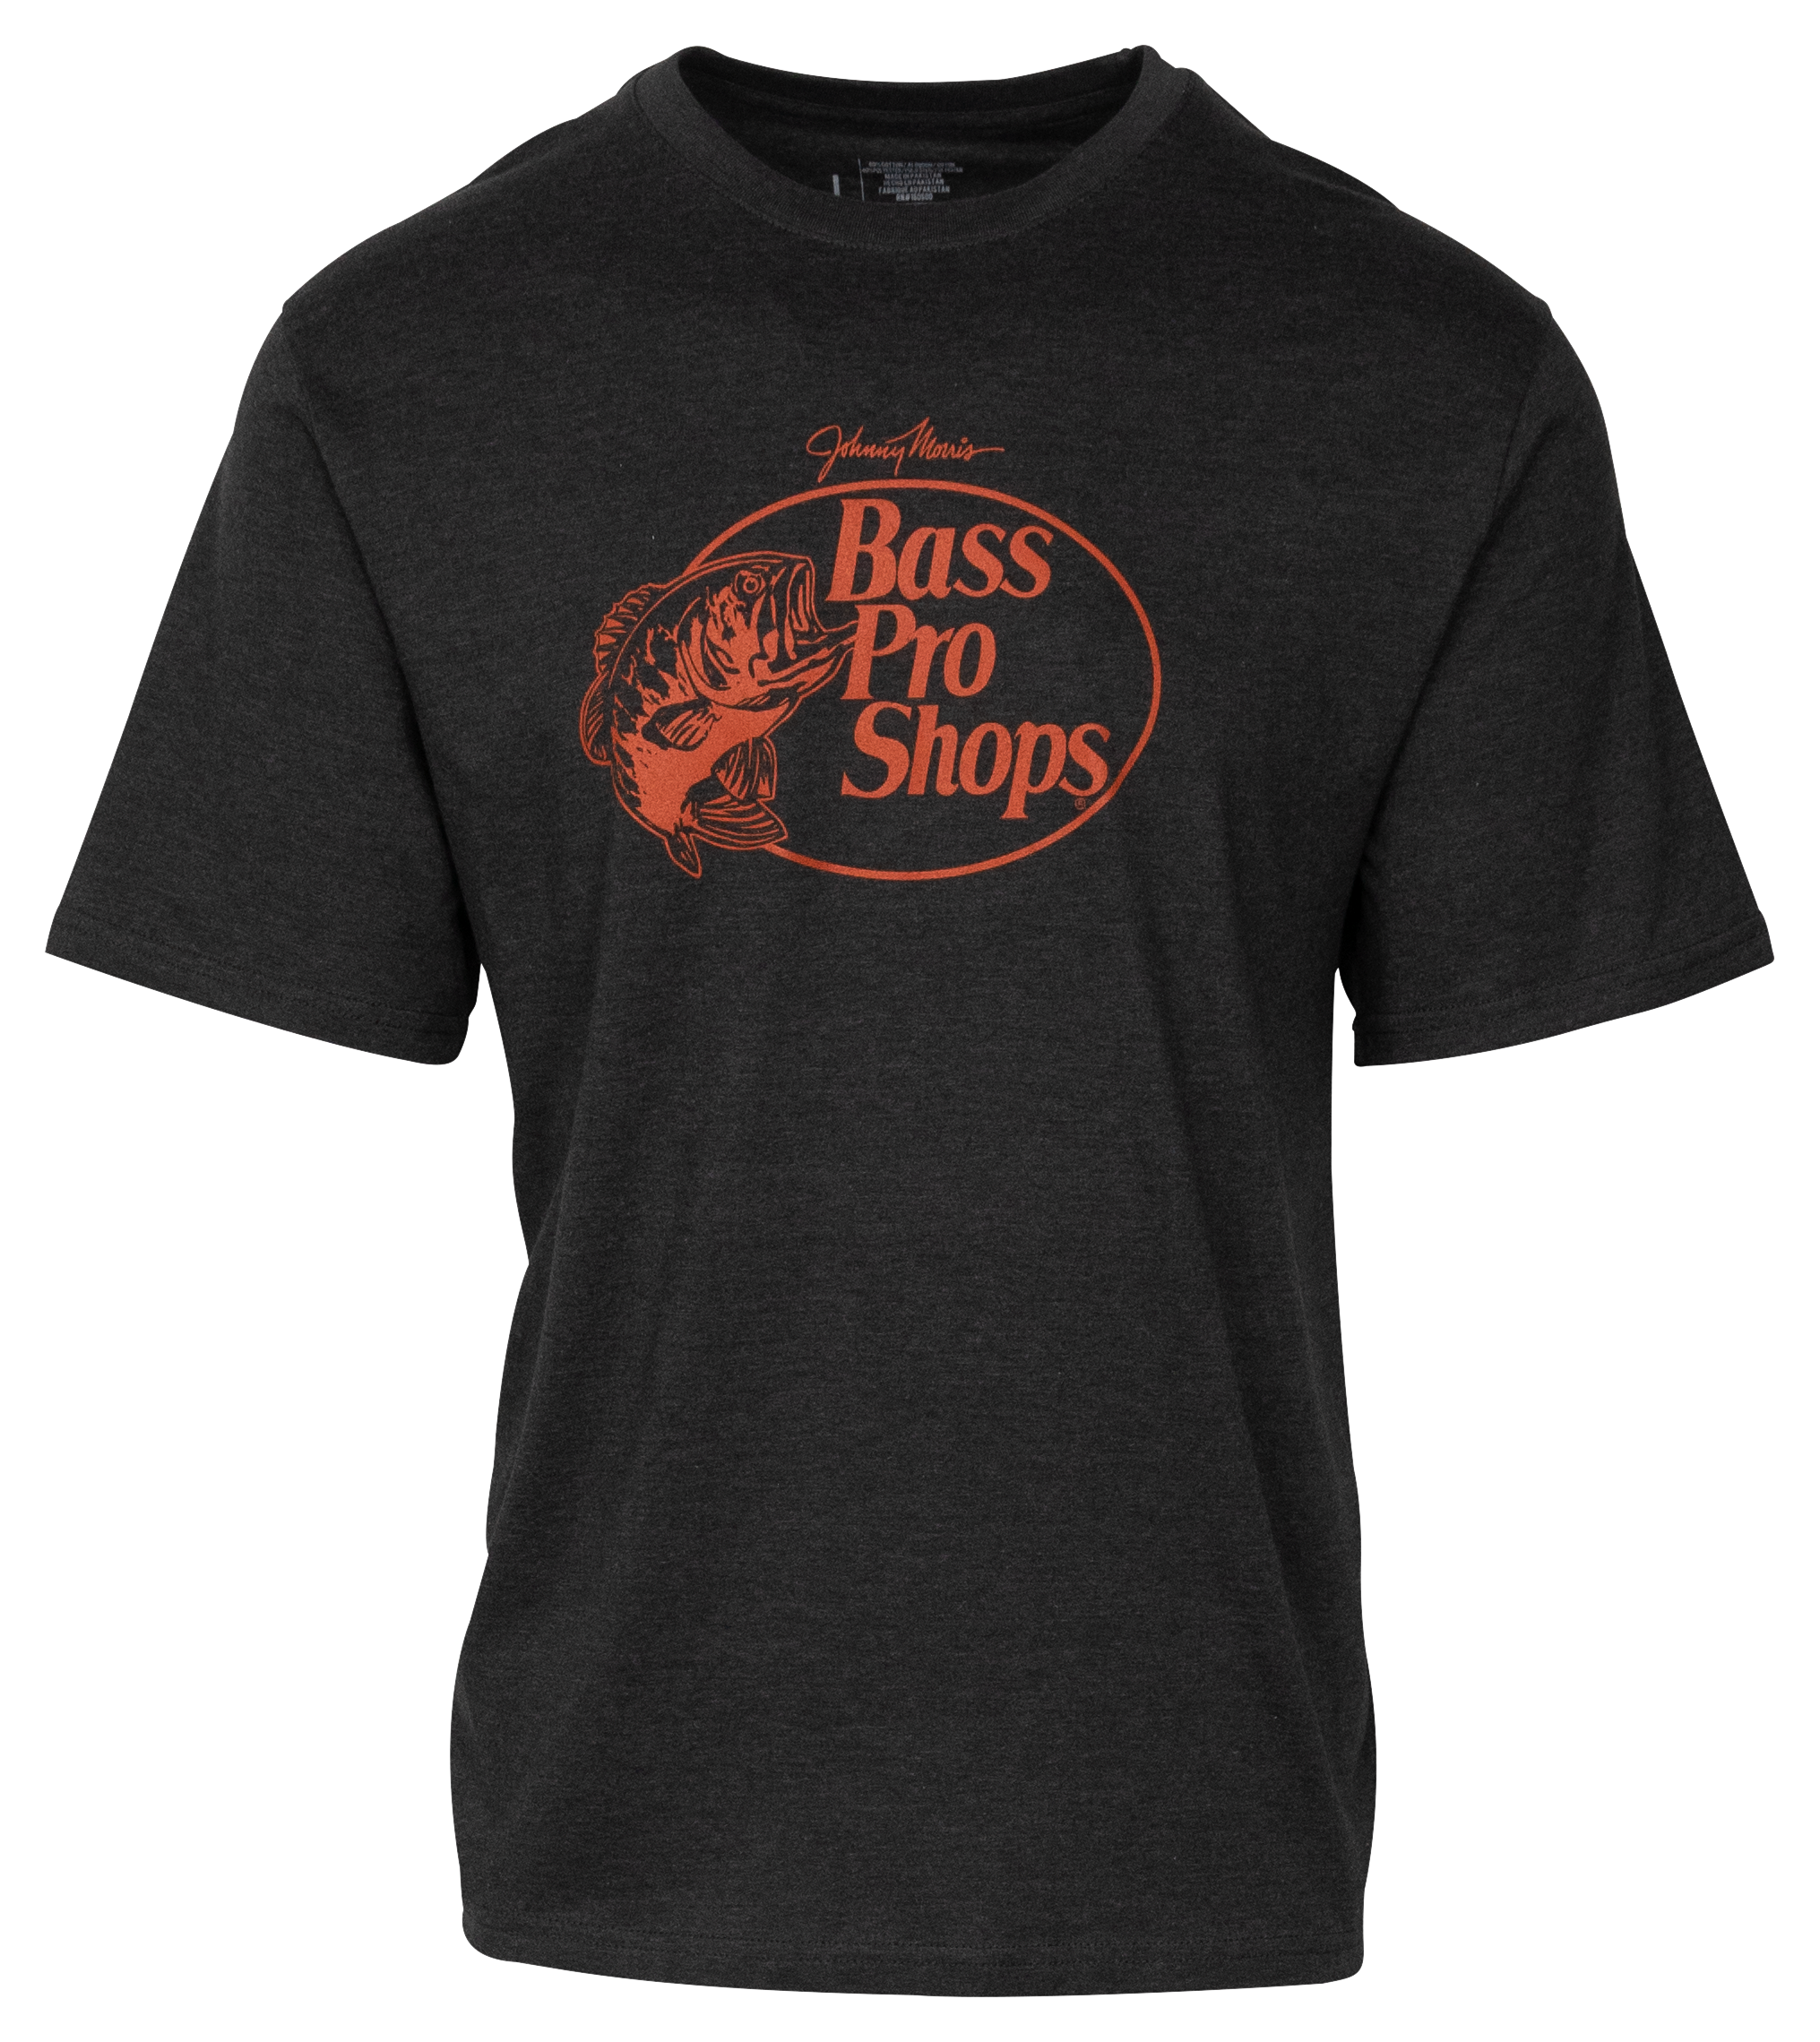 Bass Pro Shops Original Logo 2.0 Short-Sleeve T-Shirt for Men - Charcoal Heather - M